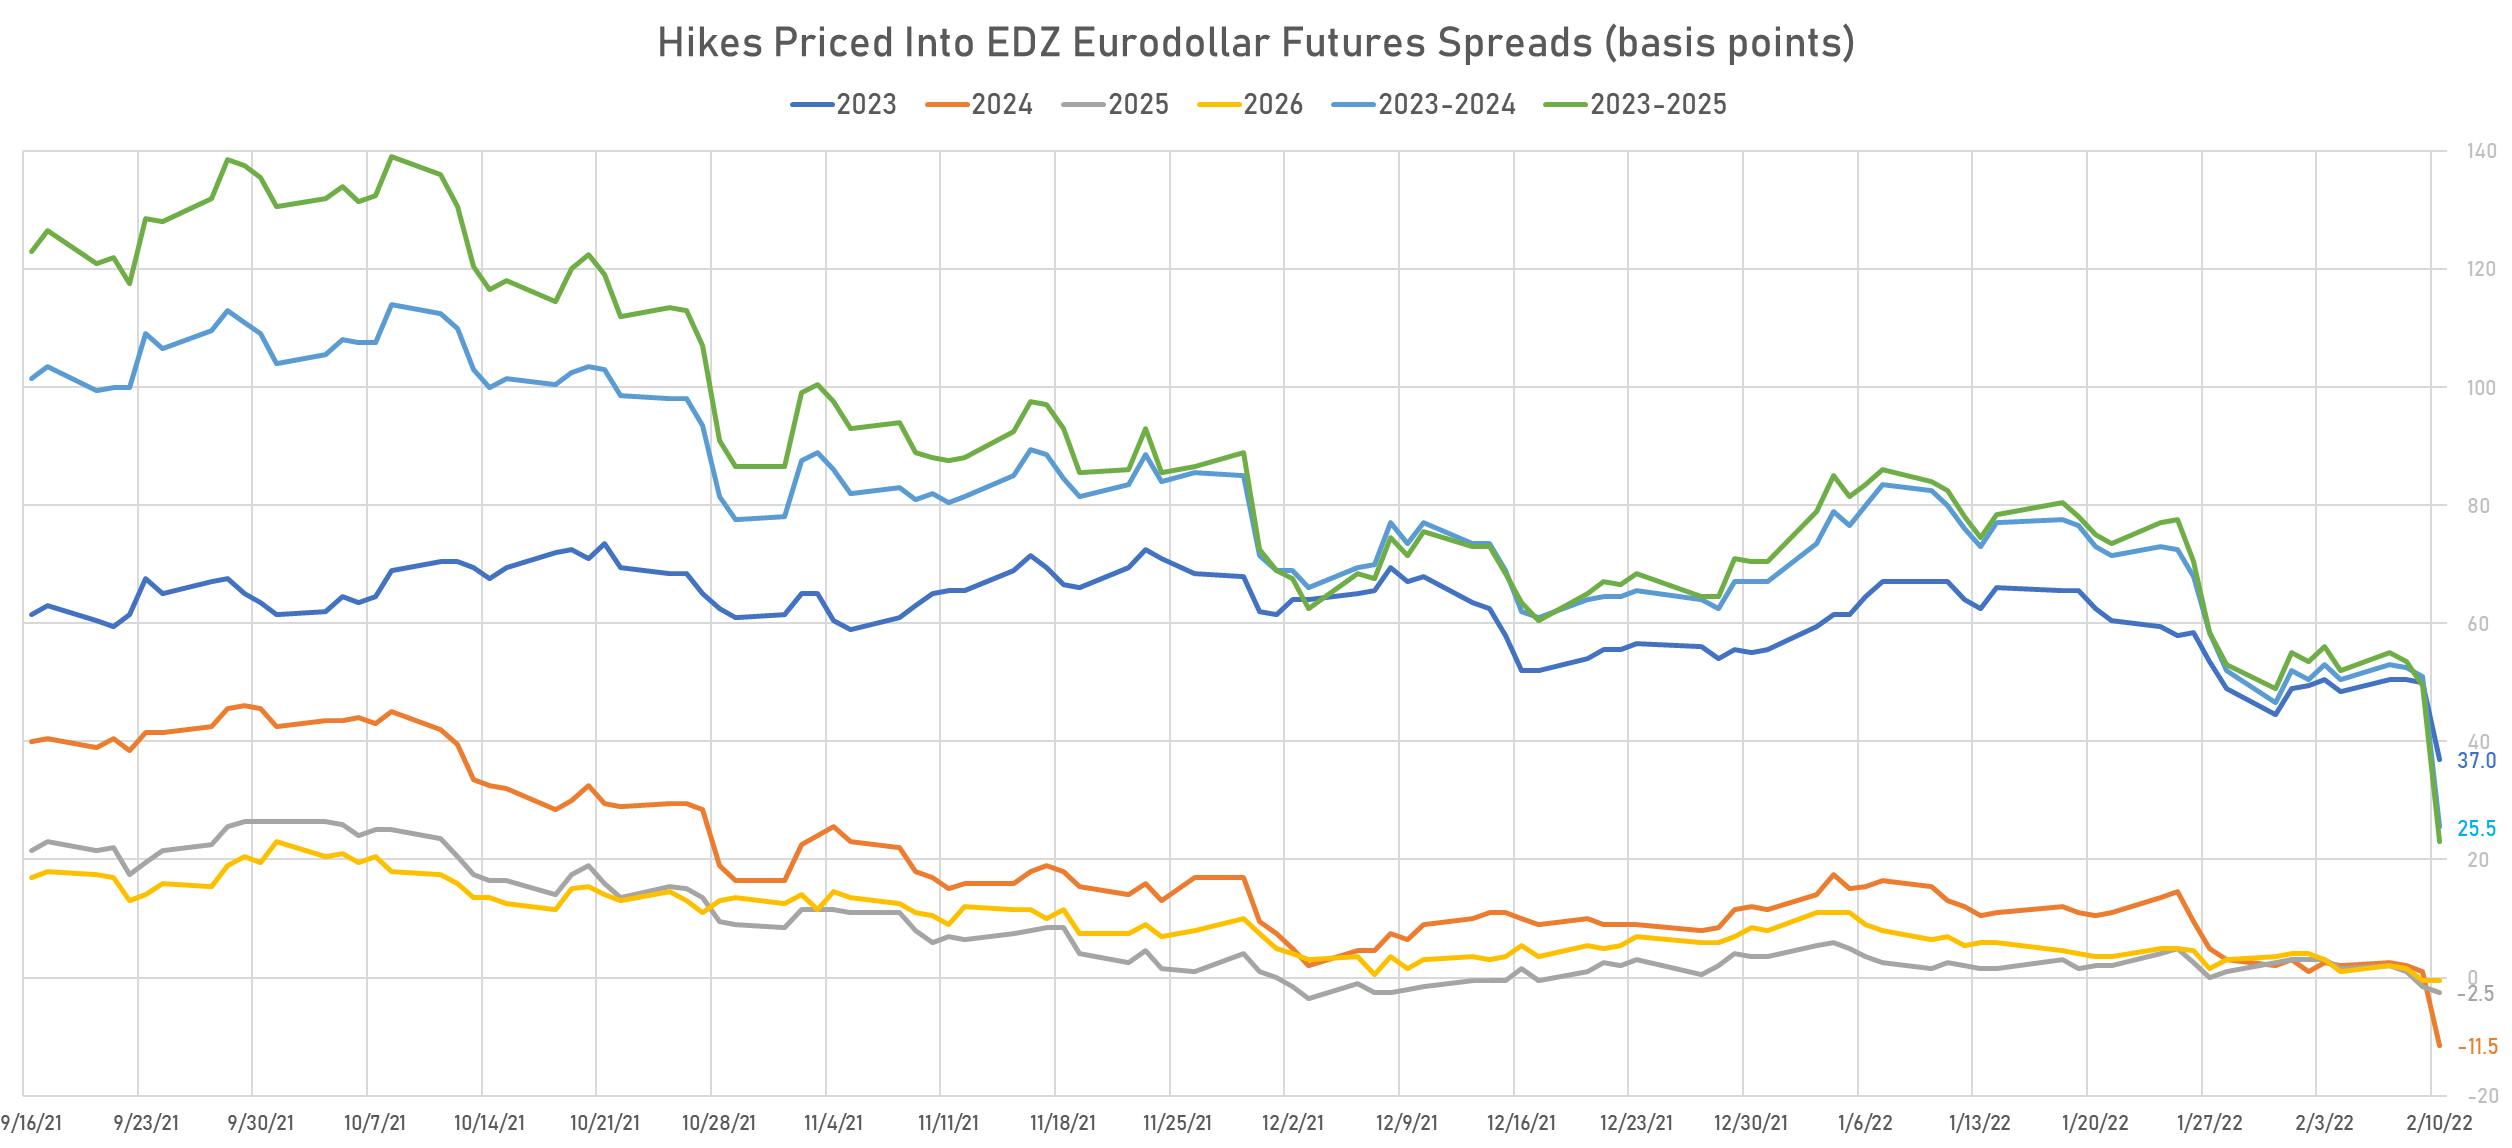 Hikes Priced Into Eurodollar Futures | Sources: phipost.com, Refinitiv data